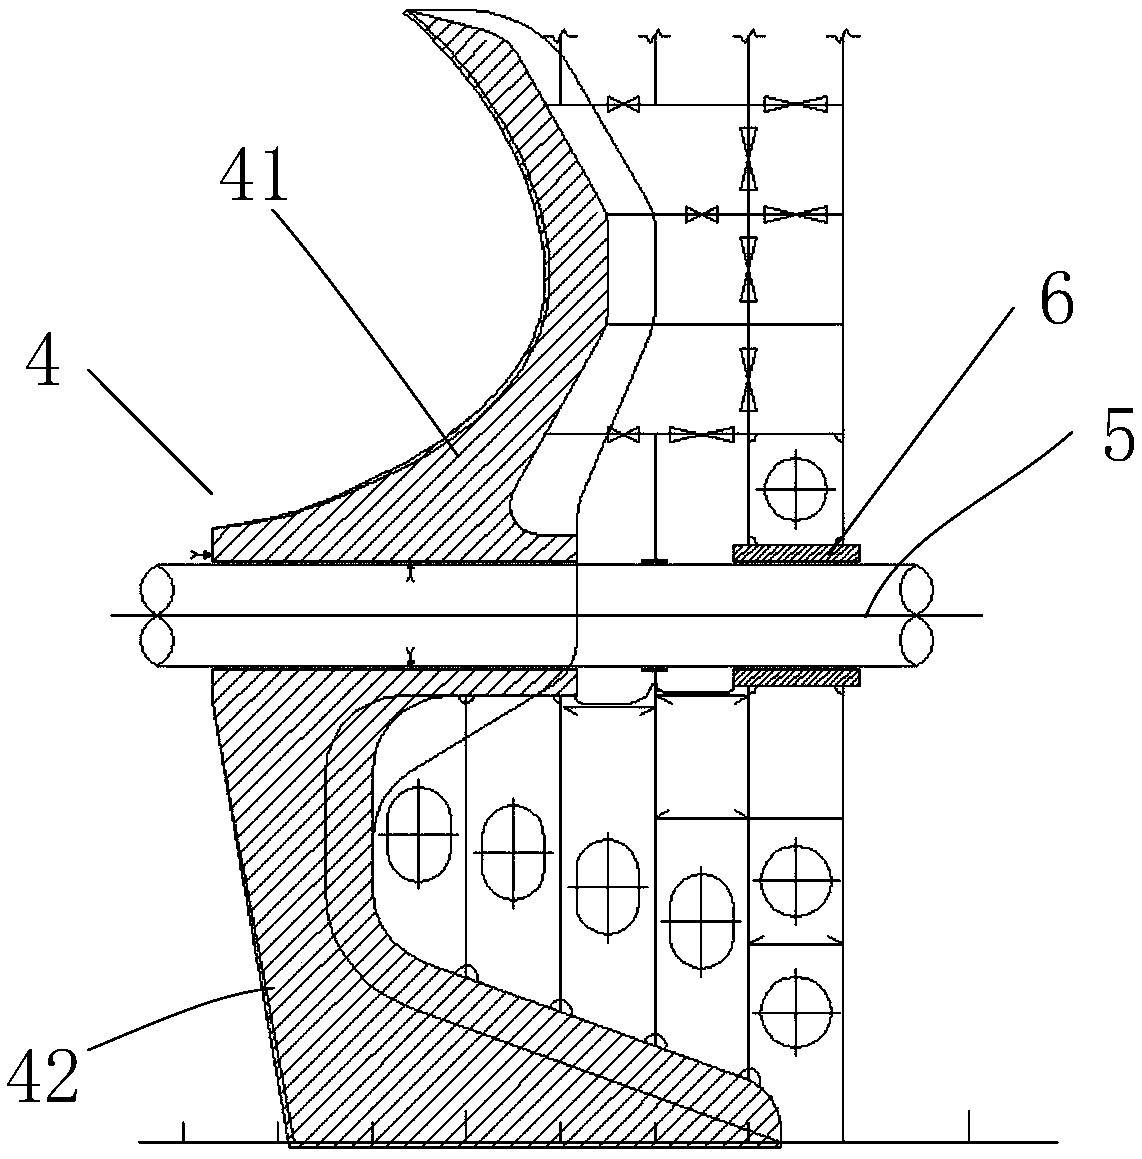 An asymmetric stern structure of a ship